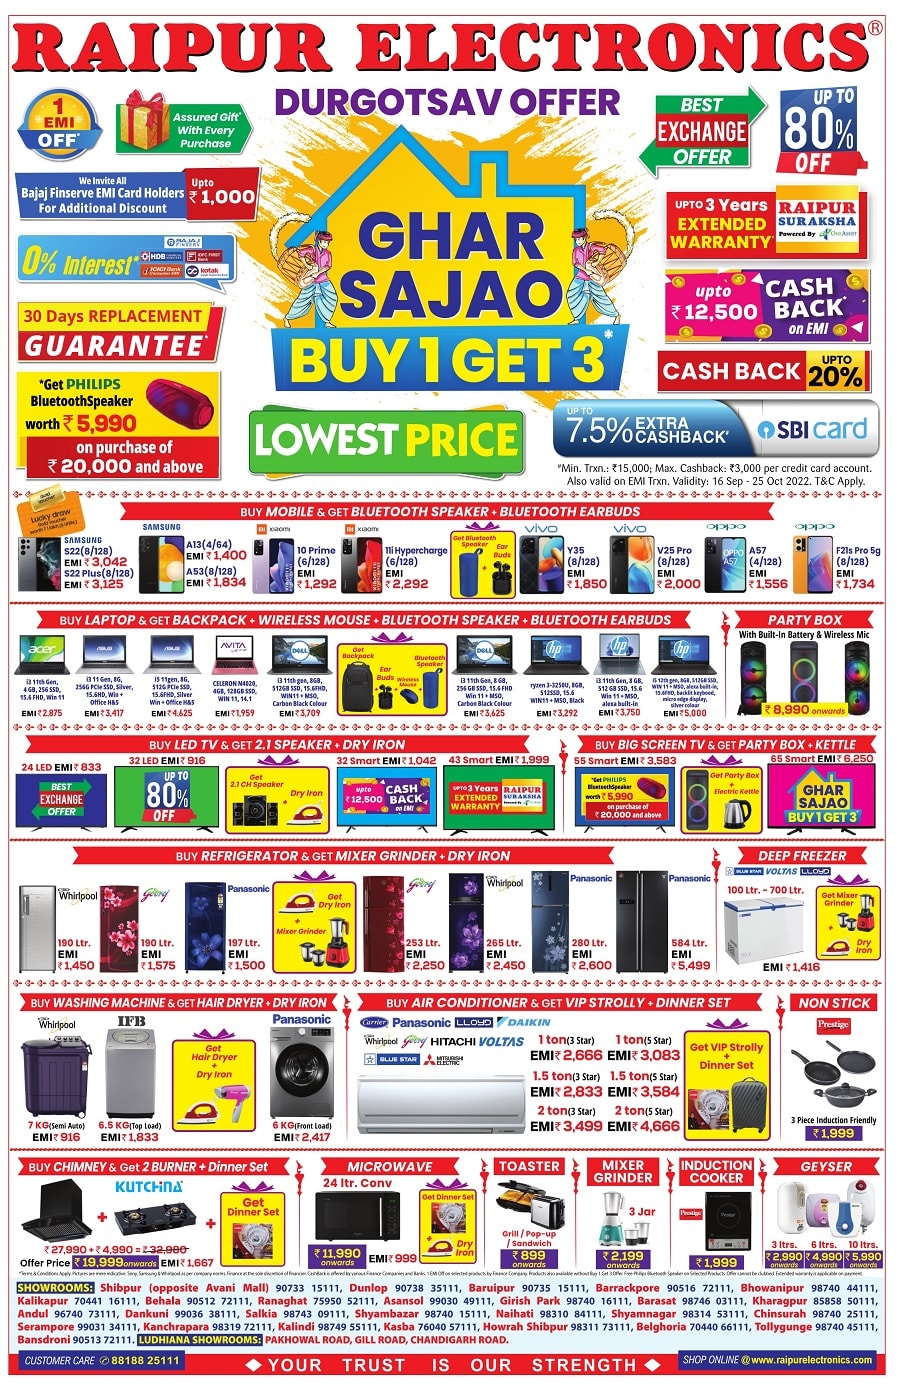 Raipur Electronics Dugotsav offers